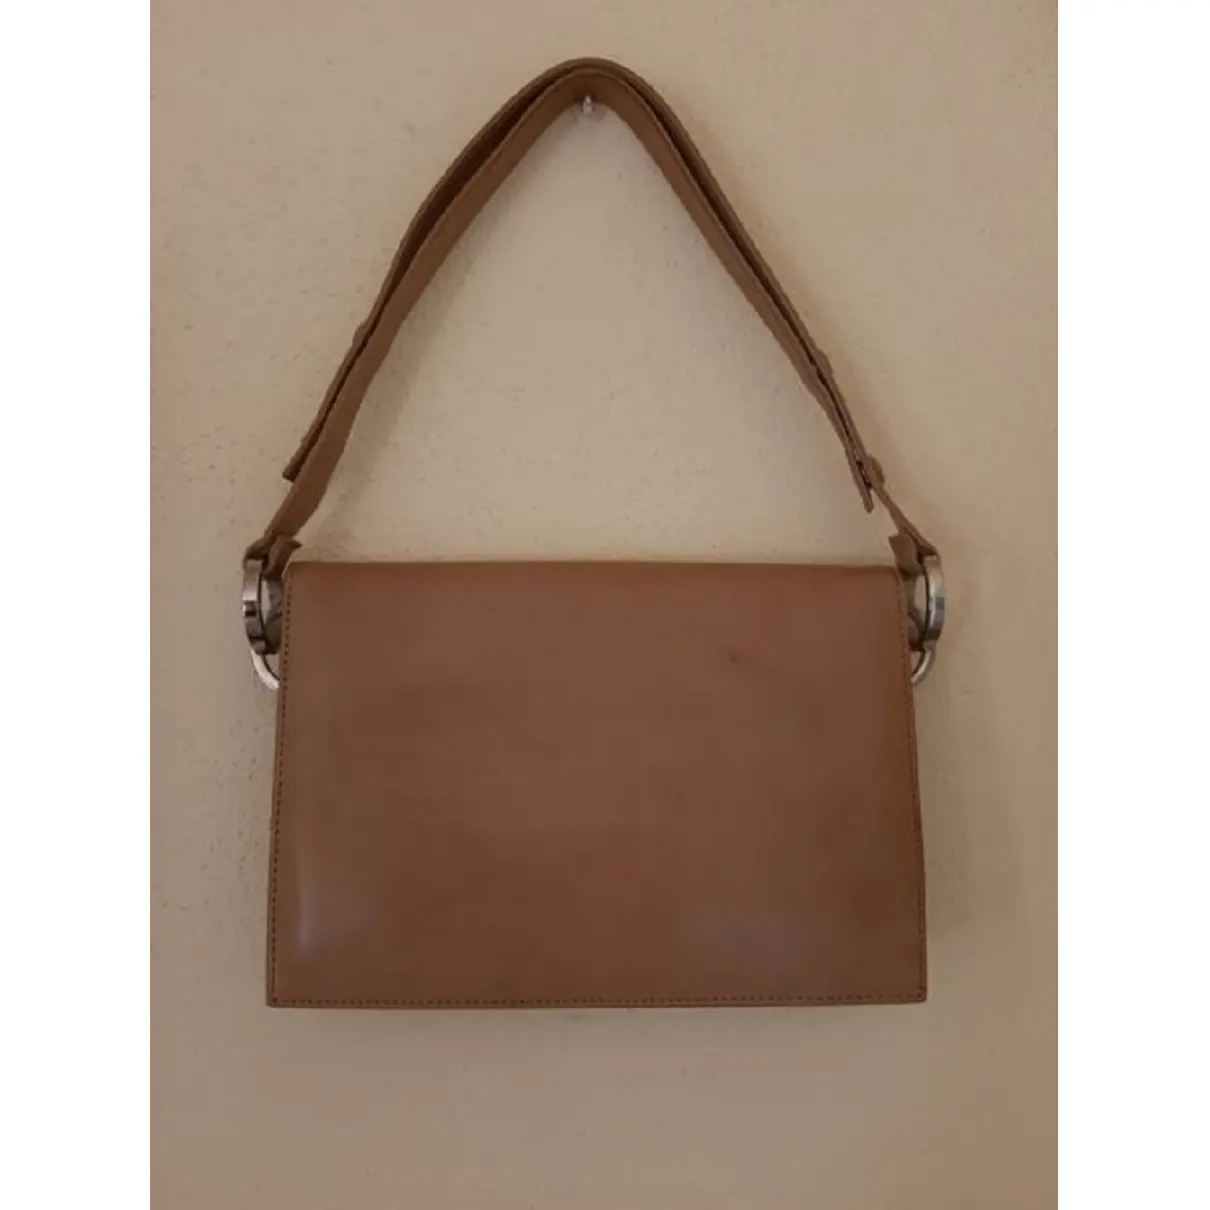 Buy Valentino Garavani Leather handbag online - Vintage